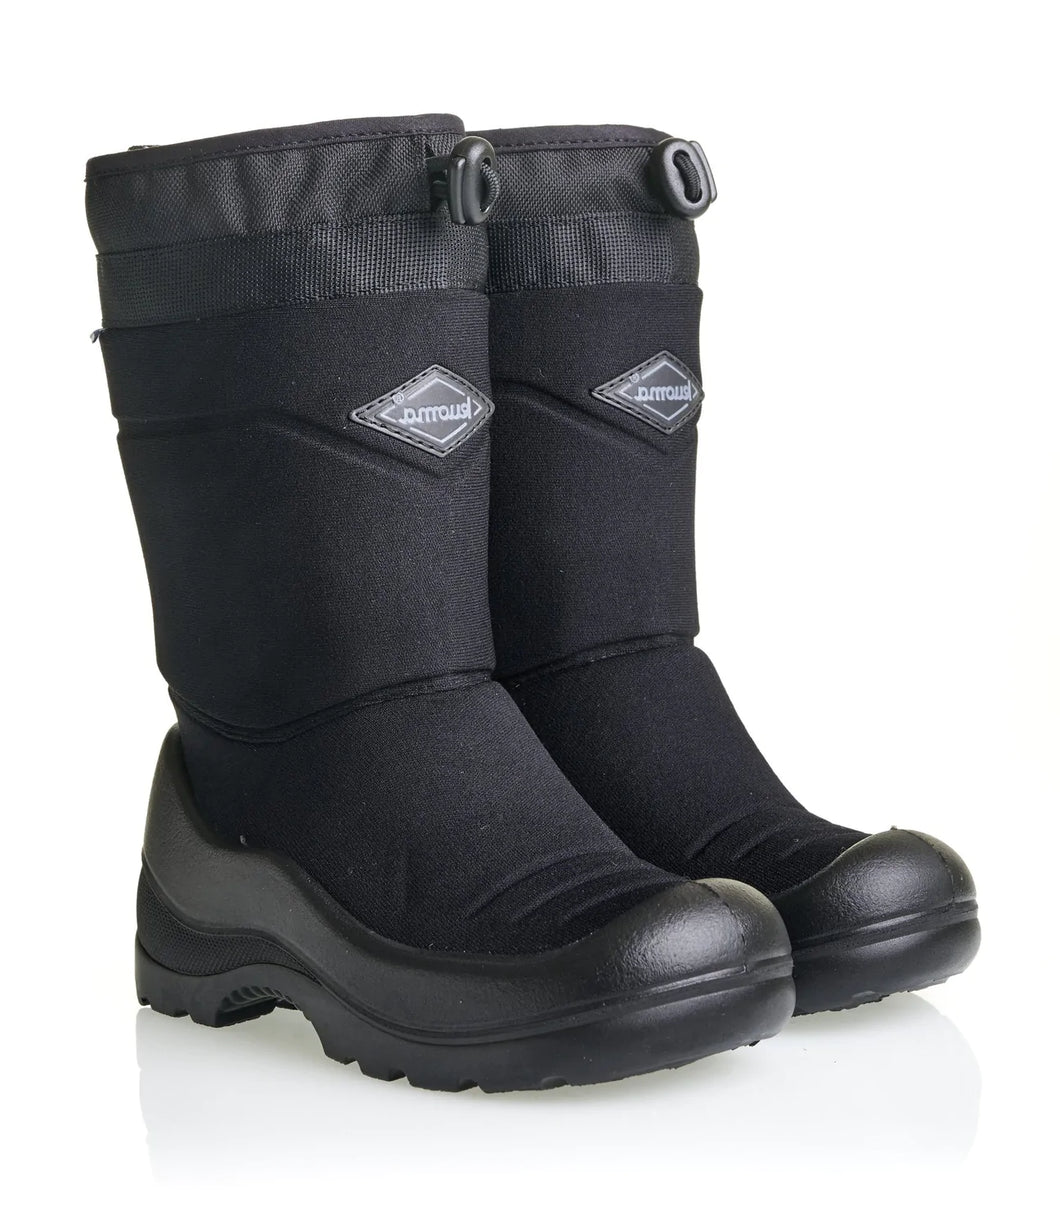 Kuoma Snowlock Winter Boots